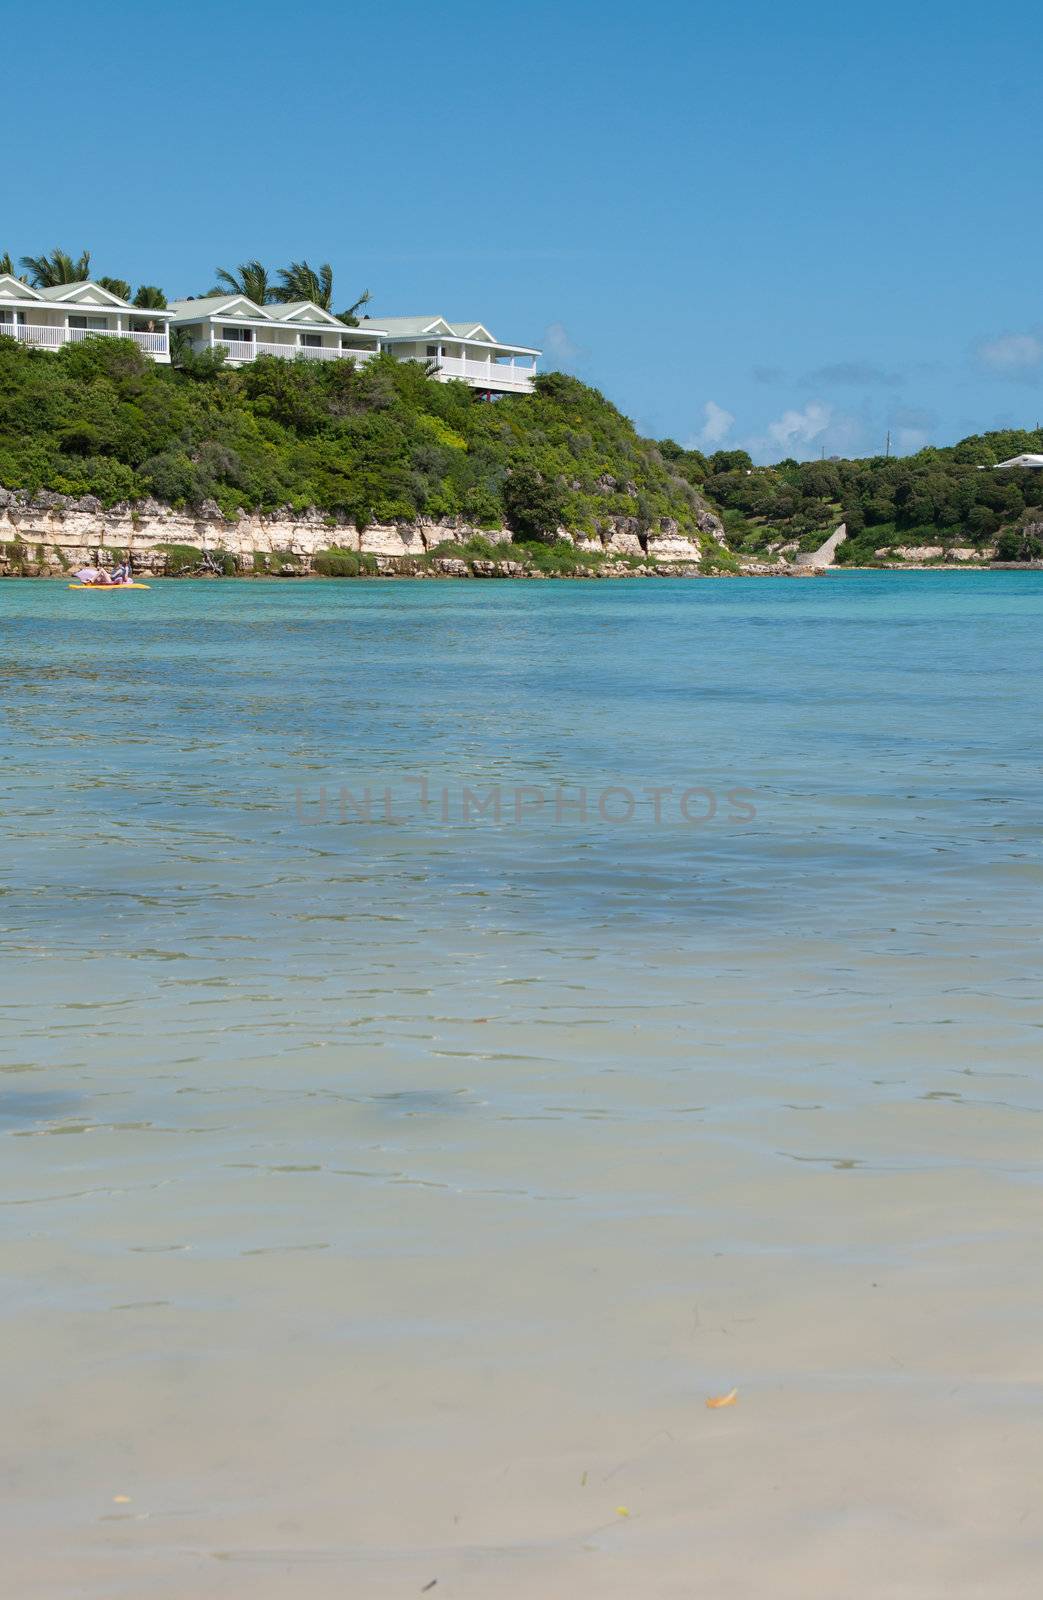 tropical beach and resort villas along the coast in Long Bay, Antigua